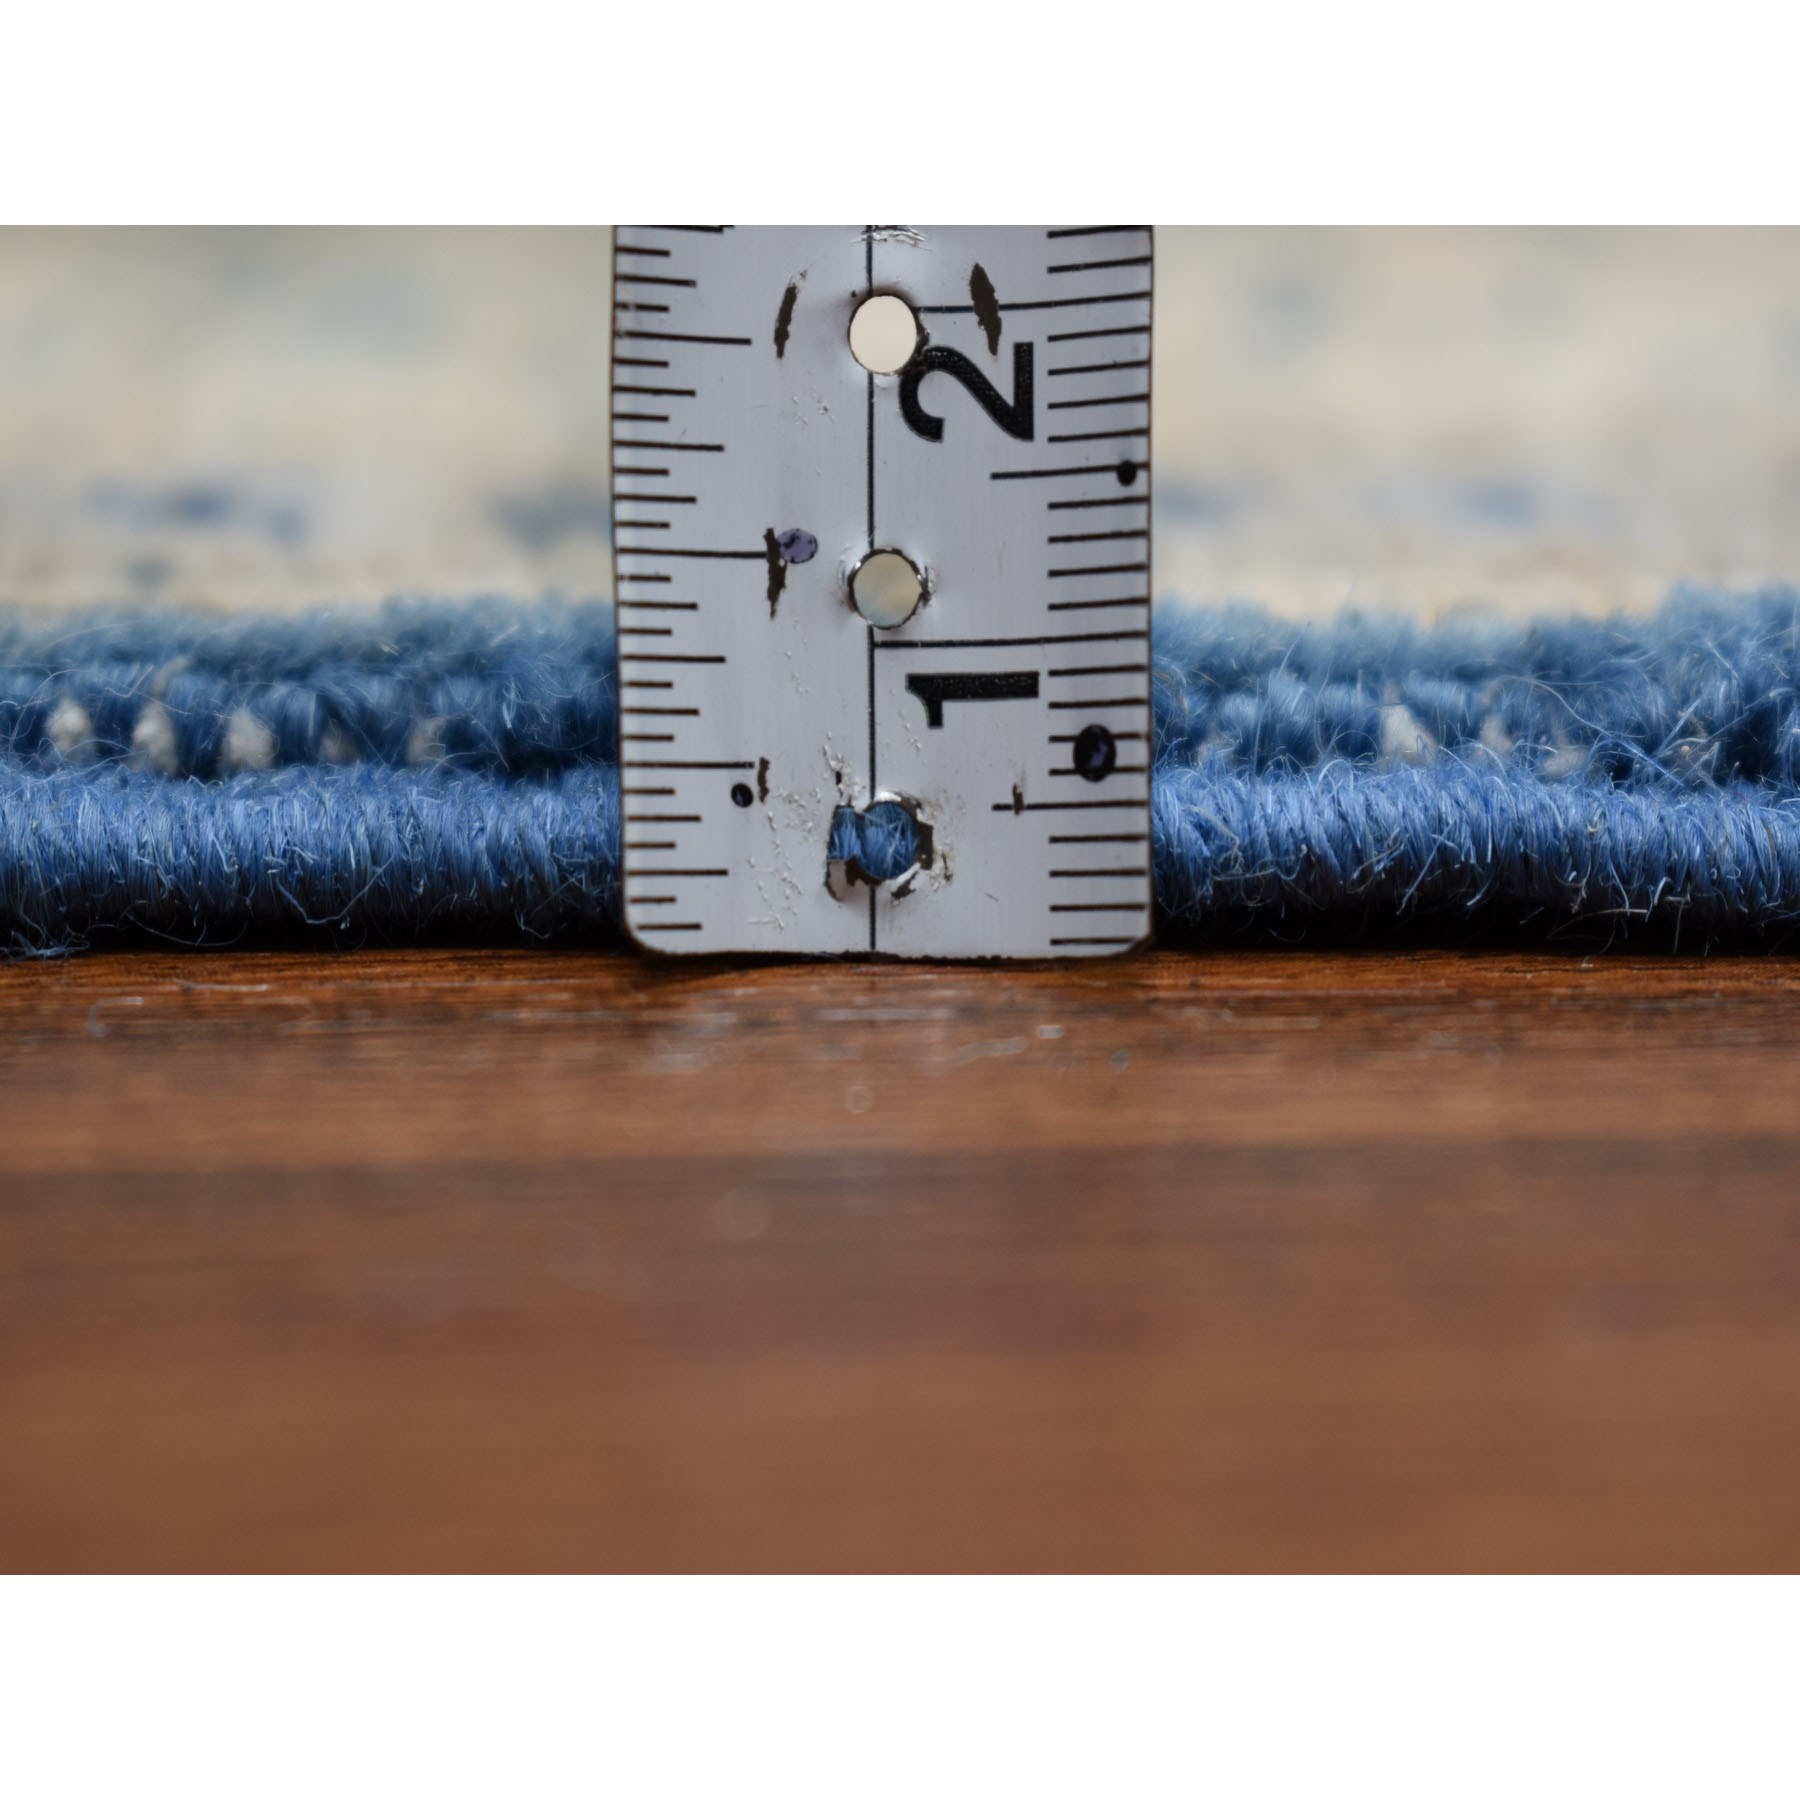 2-7 x9-5  Blue Vintage Look Kazak Geometric Design Hand Knotted Runner Oriental Rug 